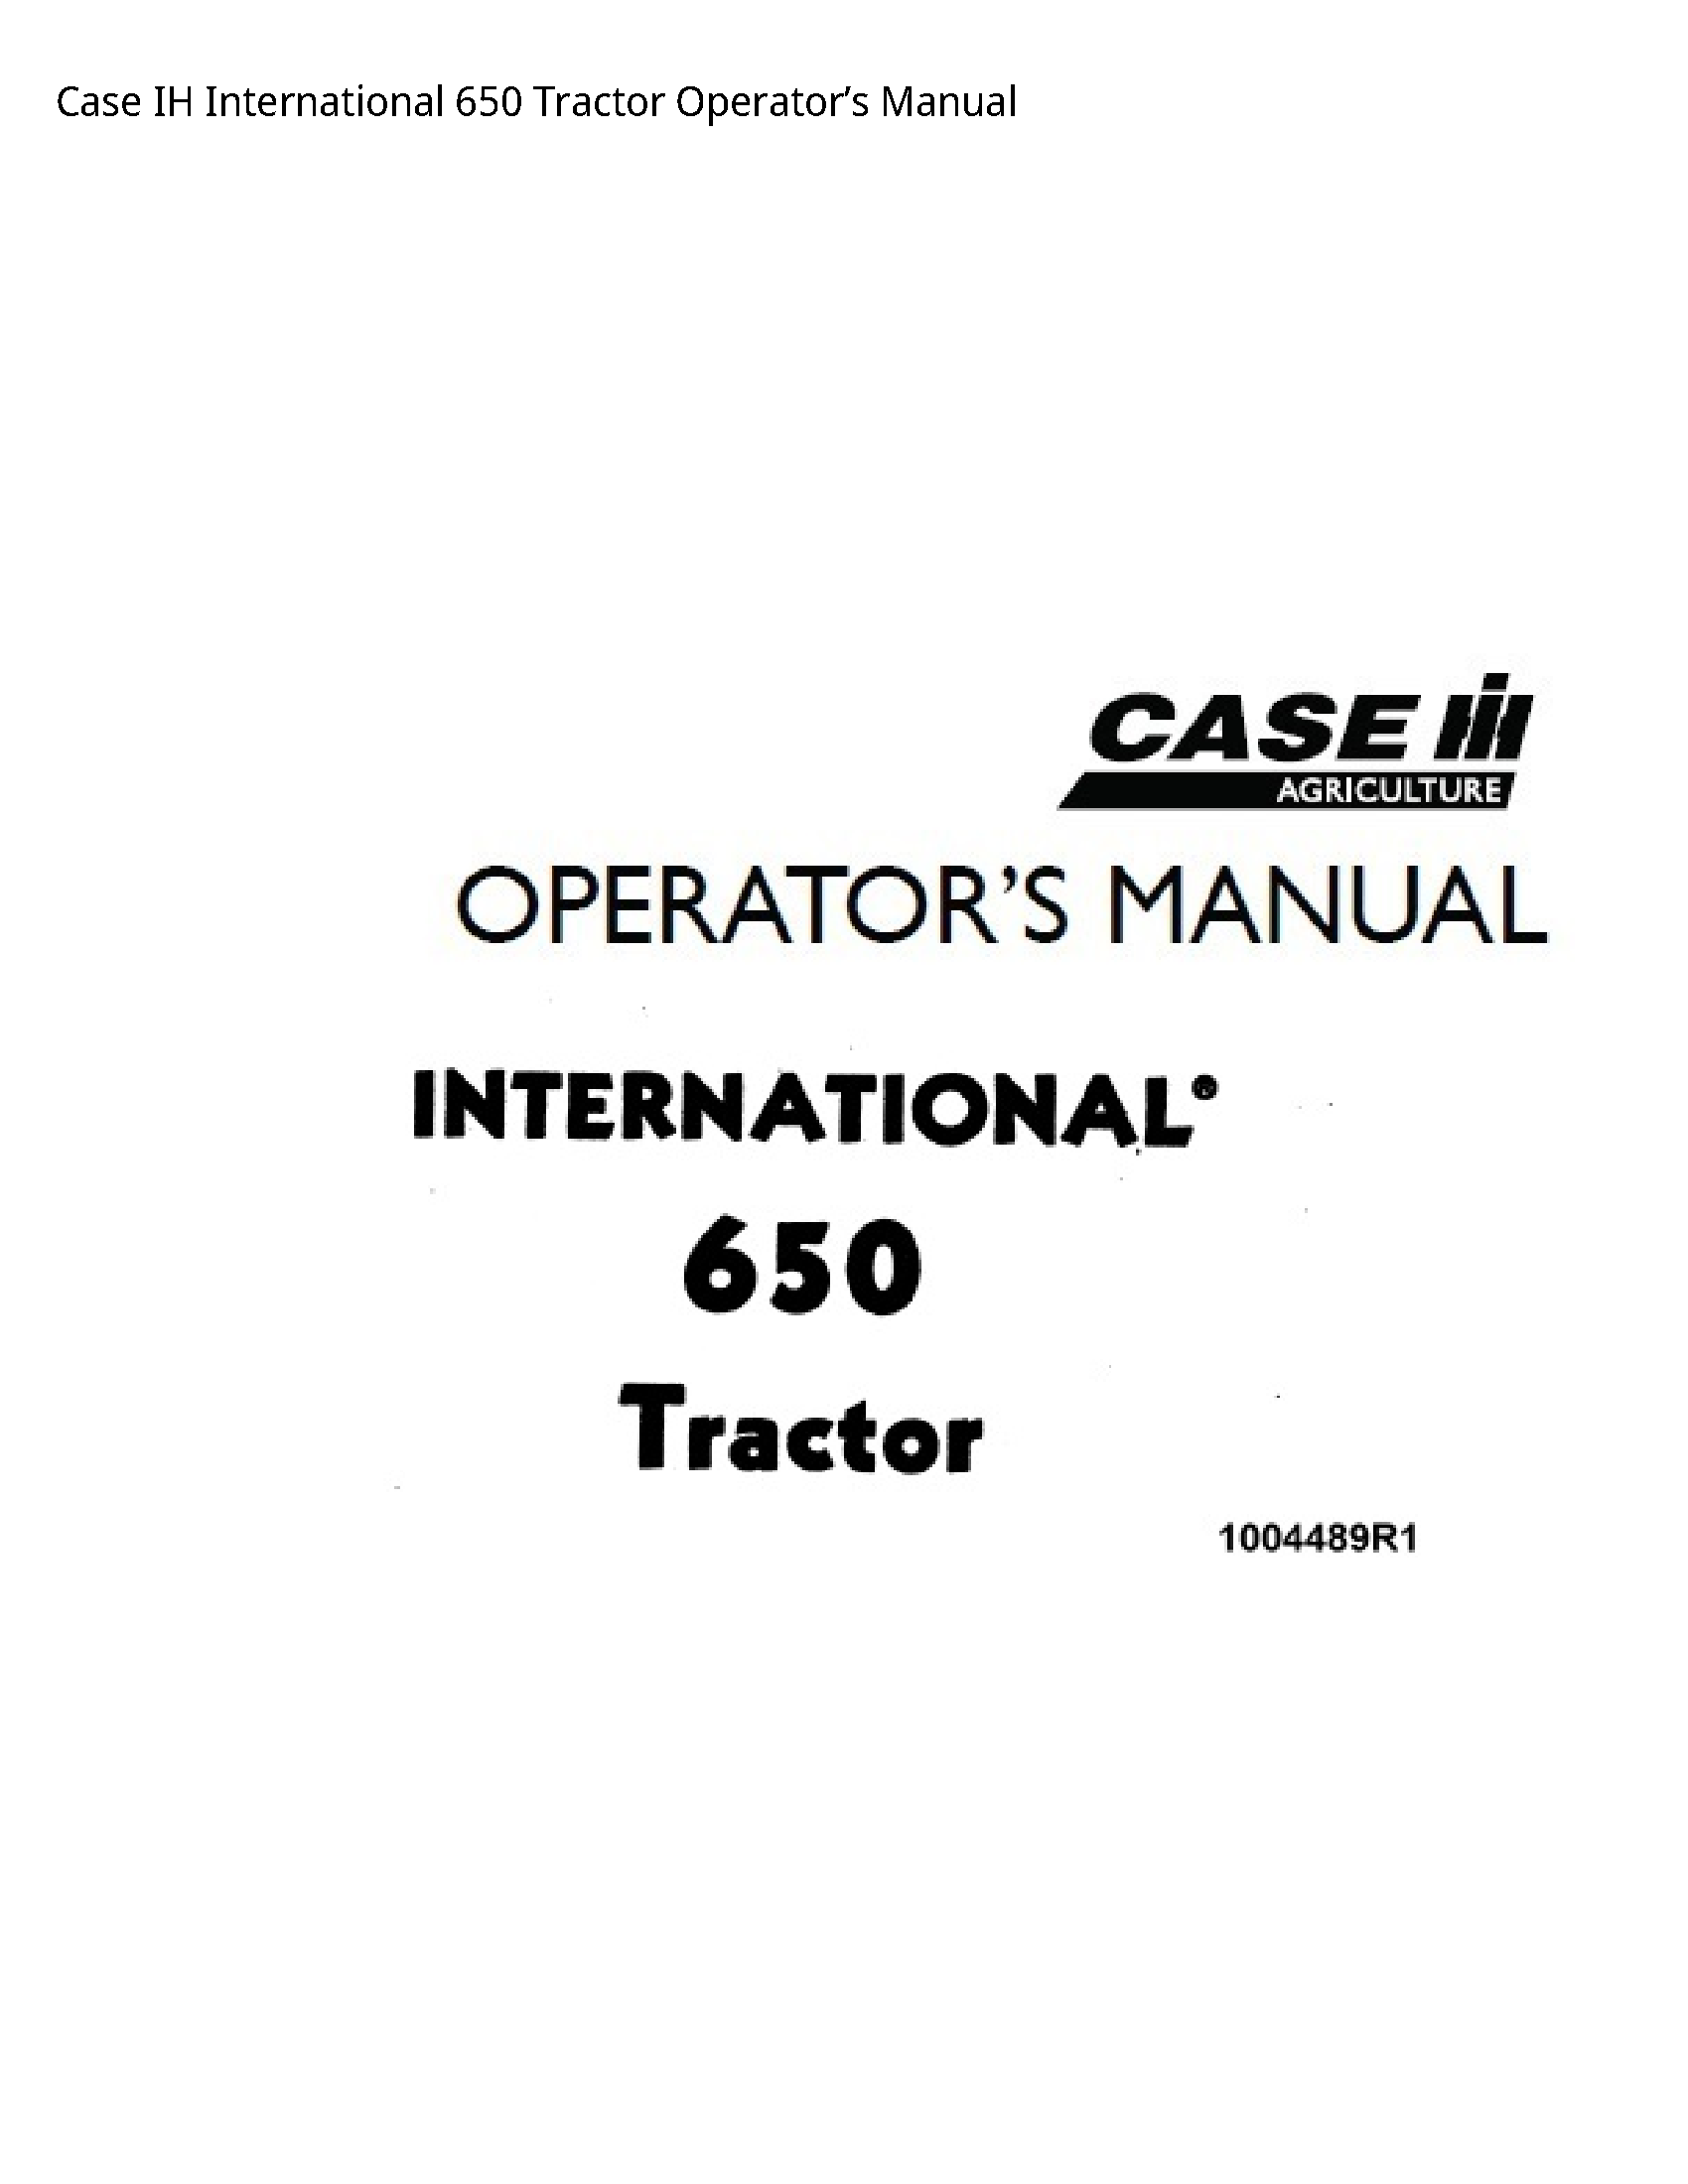 Case/Case IH 650 IH International Tractor Operator’s manual